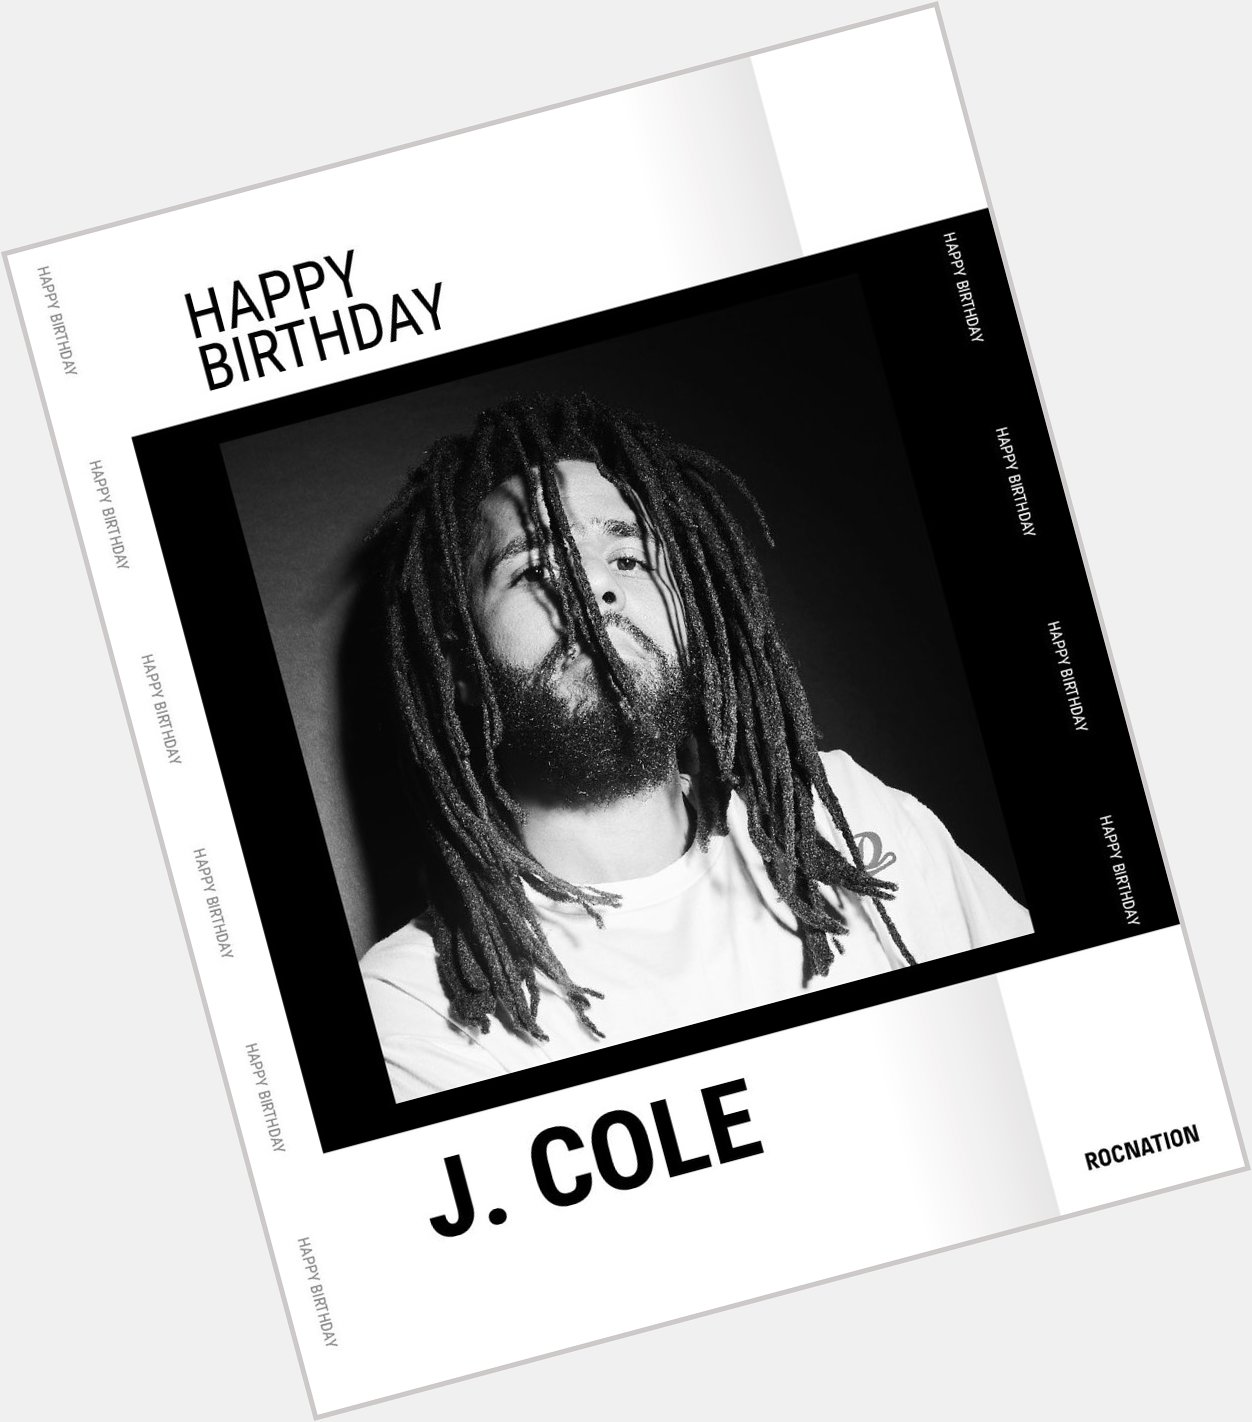 Happy Birthday Fav J. Cole 
Cole World 